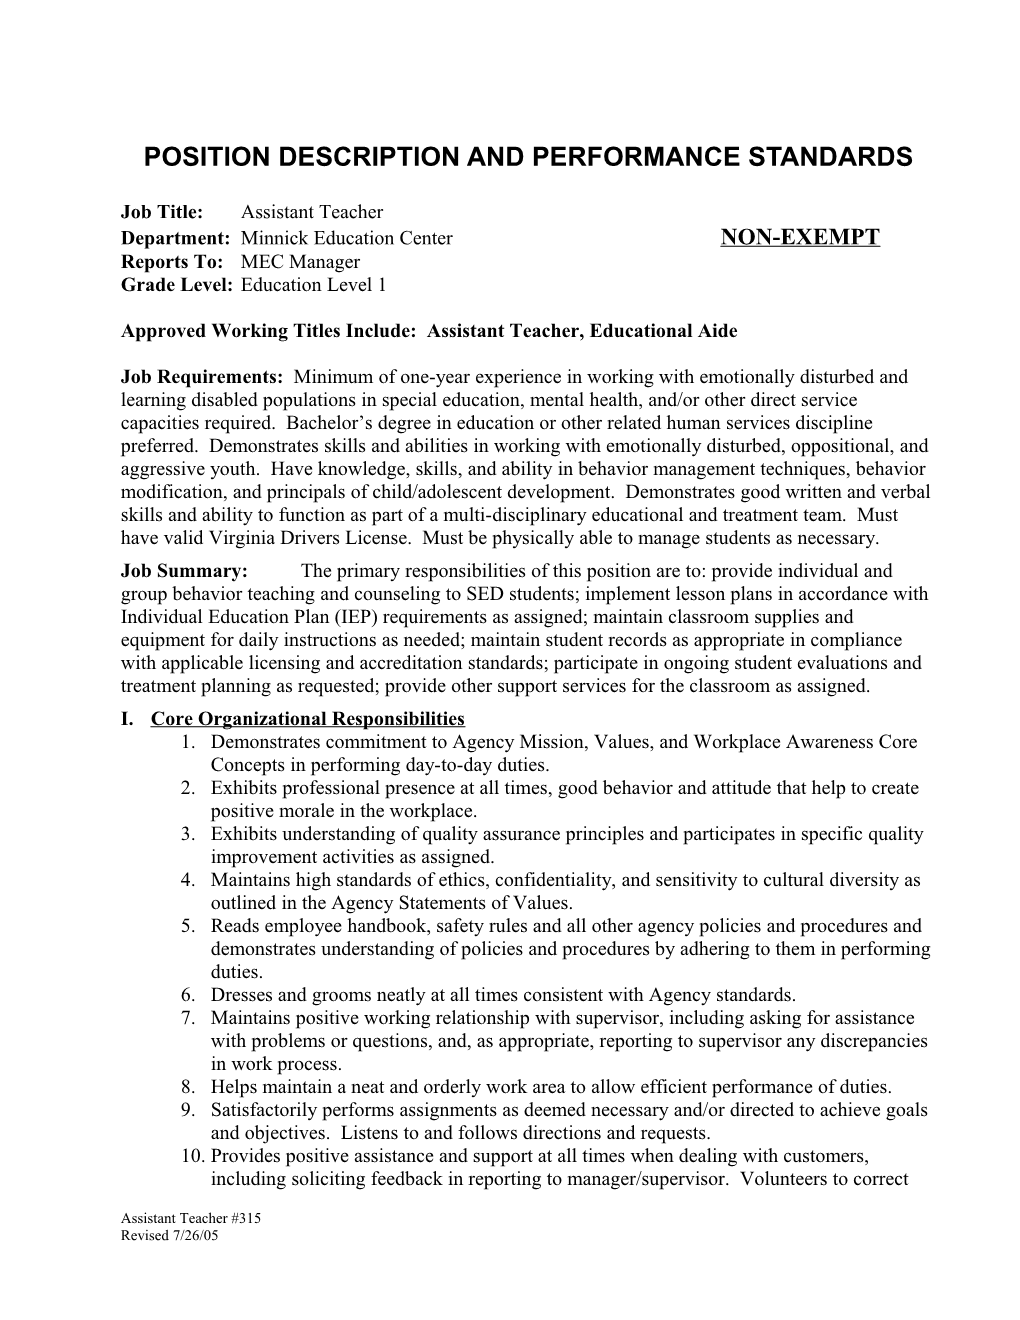 Position Description and Performance Standards